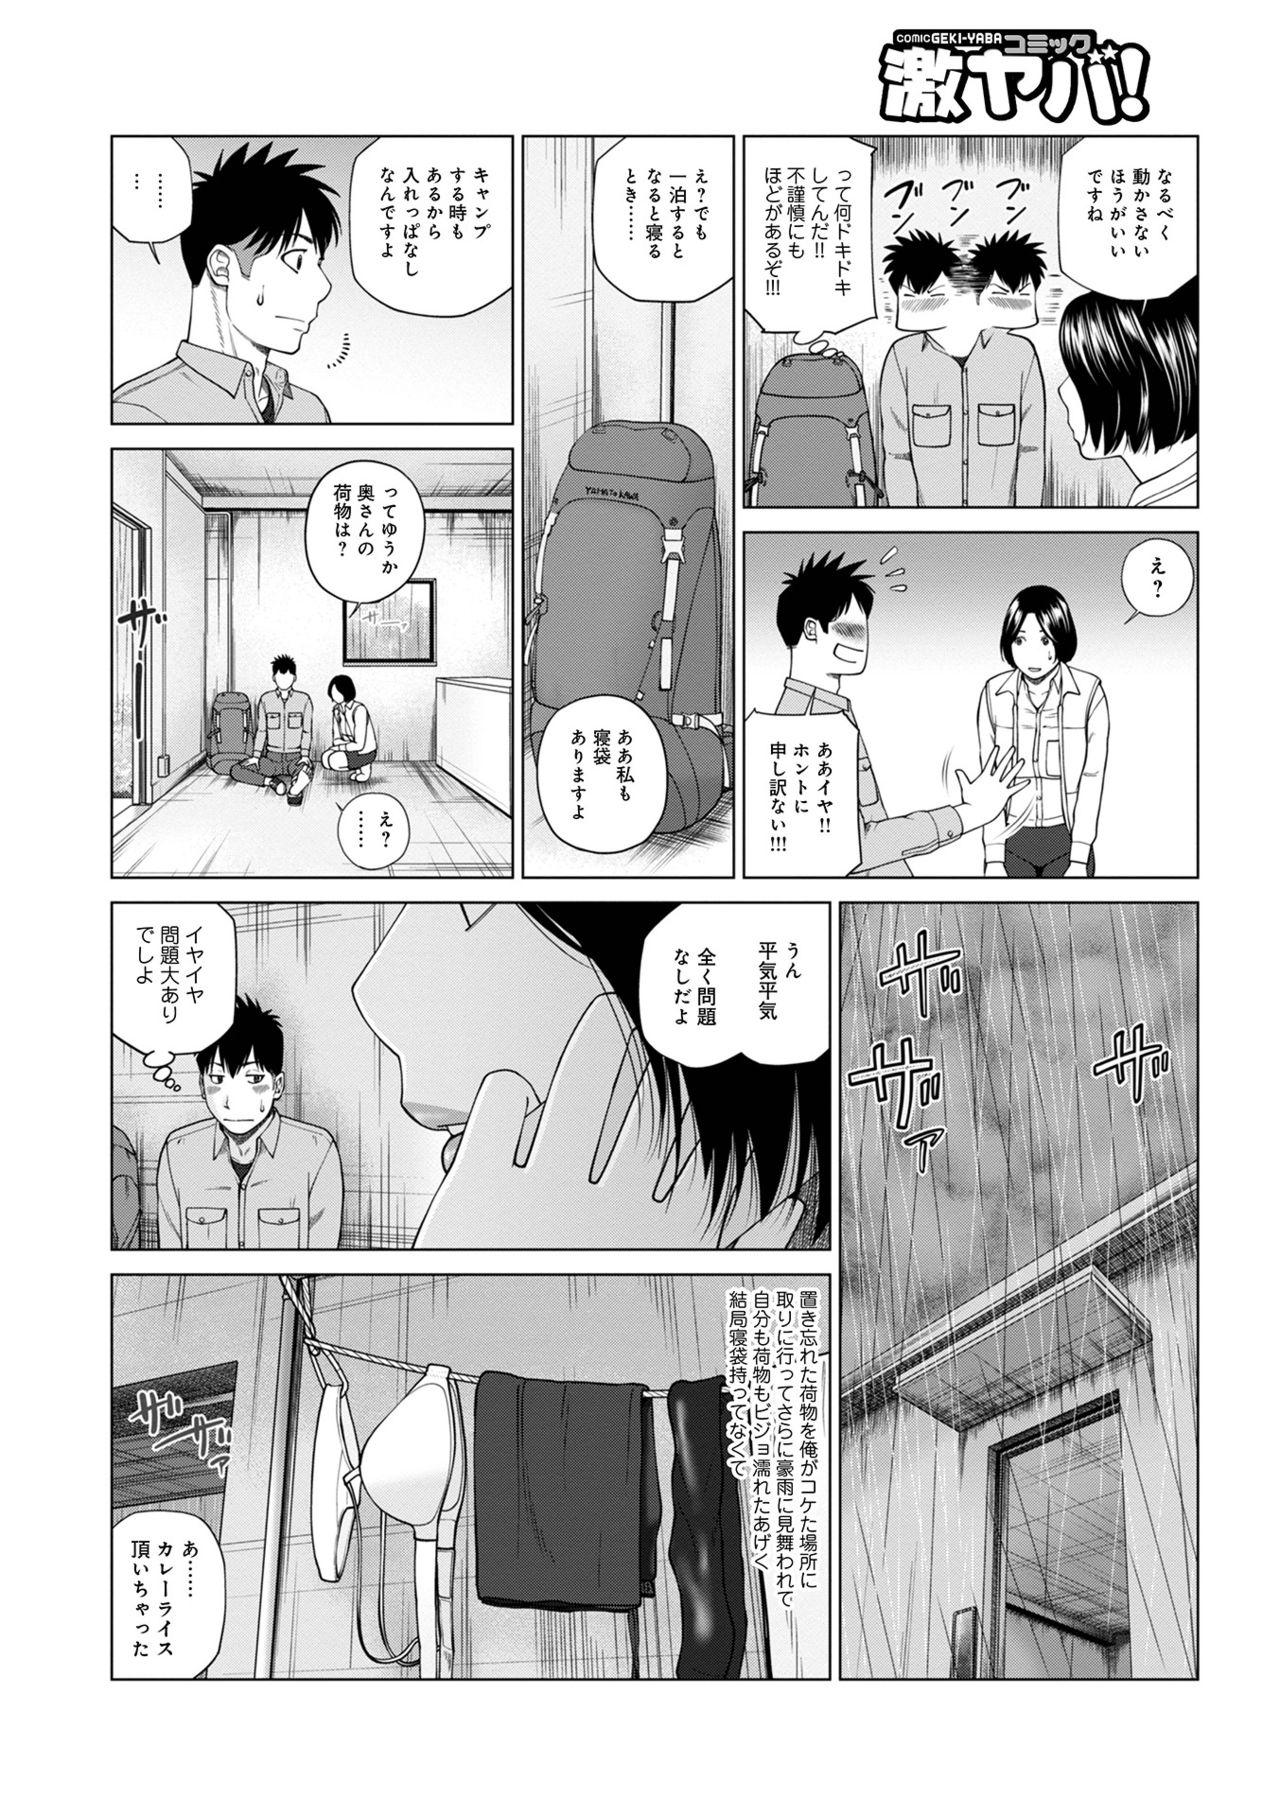 Gape WEB Ban COMIC Gekiyaba! Vol. 149 Chick - Page 6